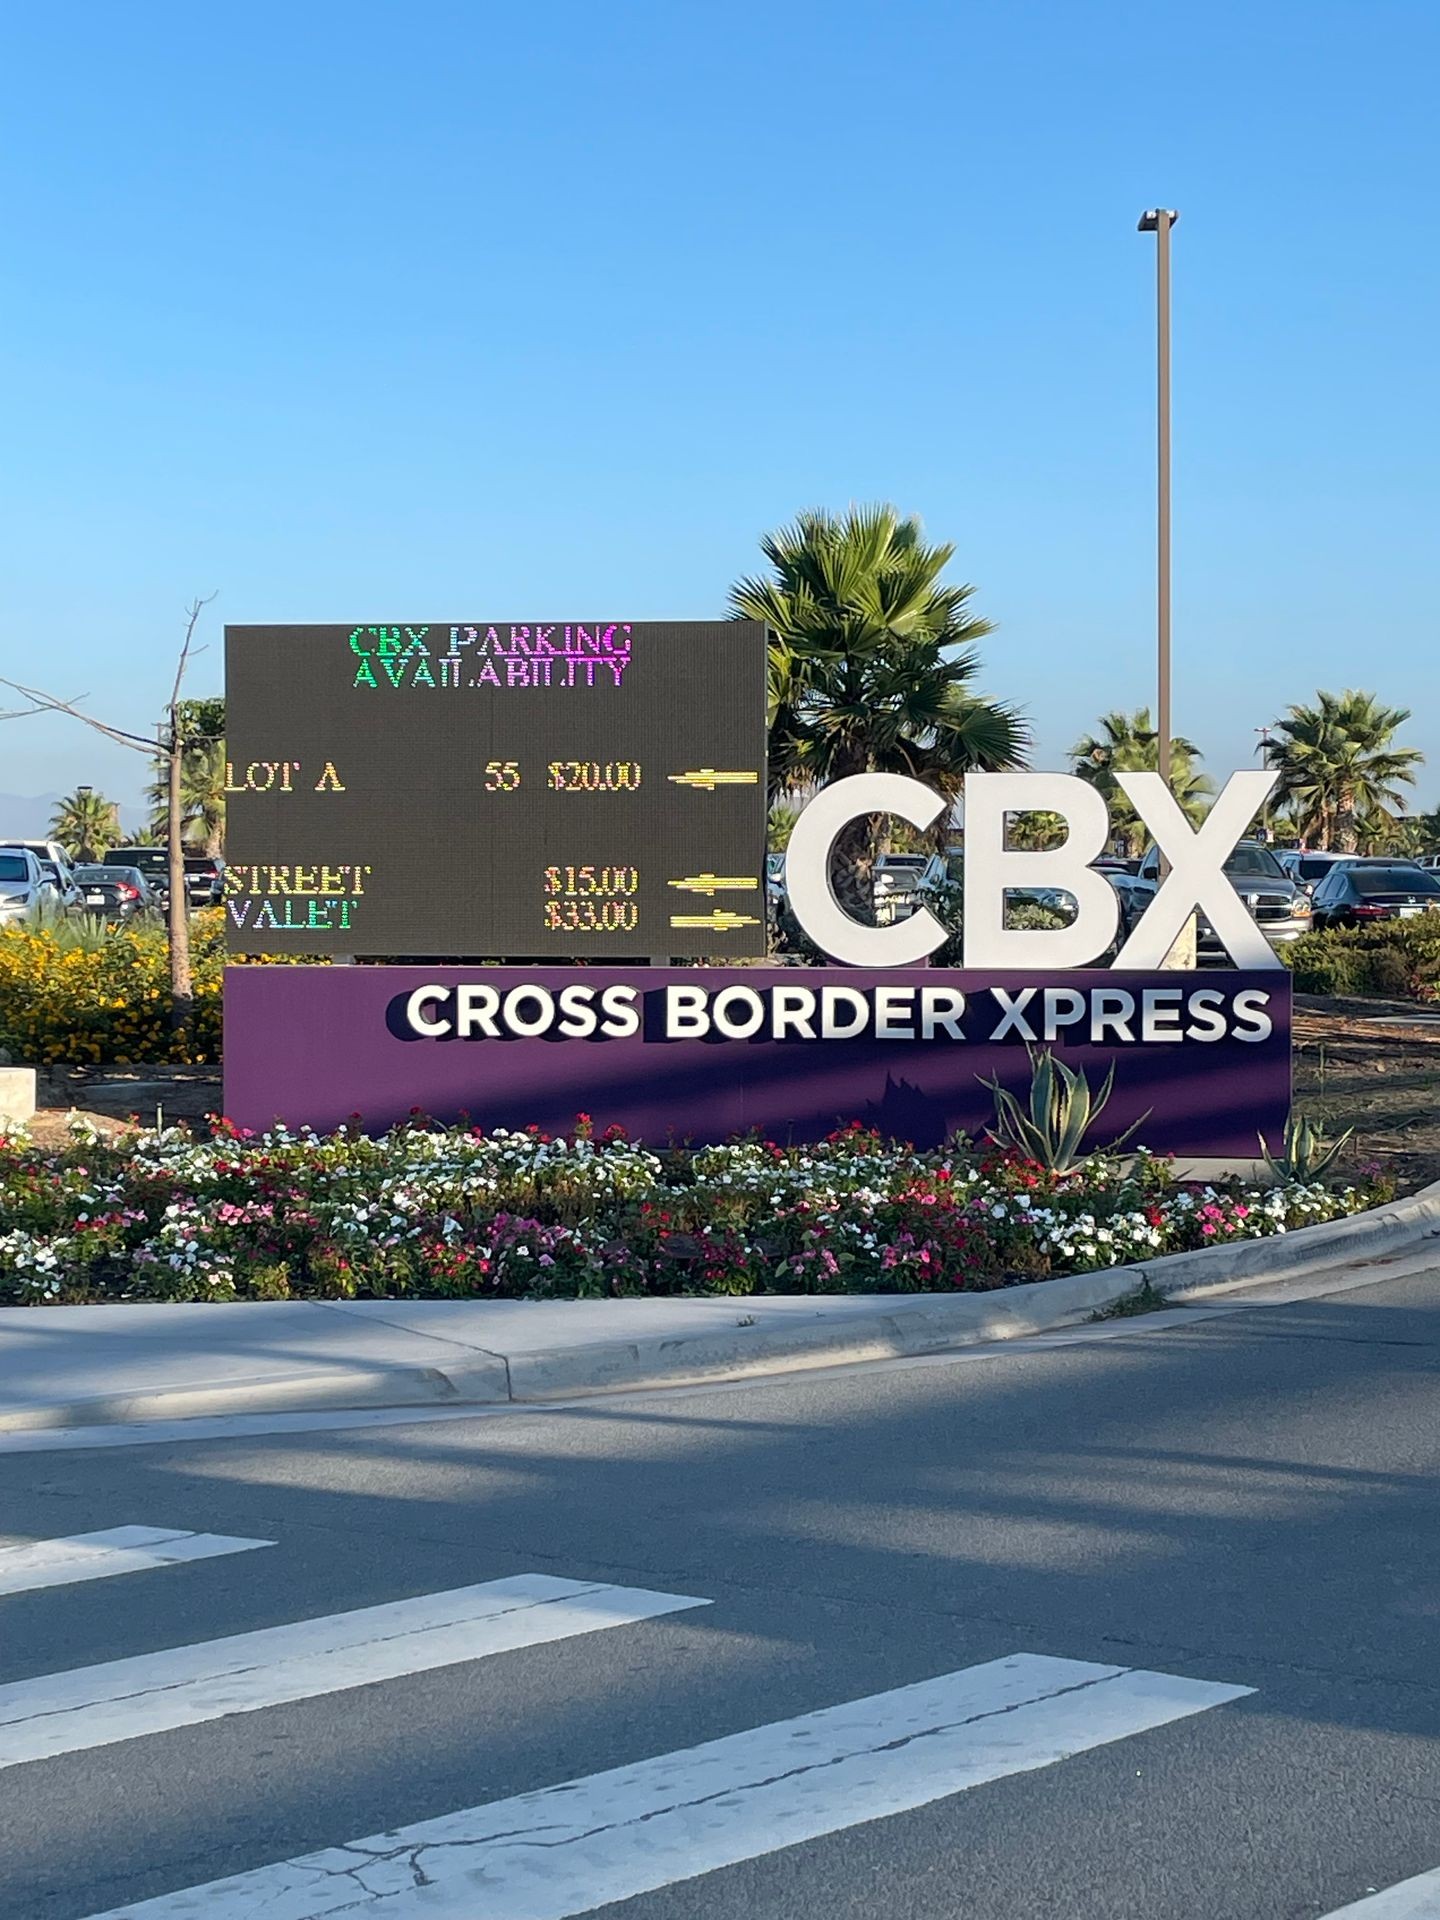 Cross Border Xpress (CBX) Airport Transportation